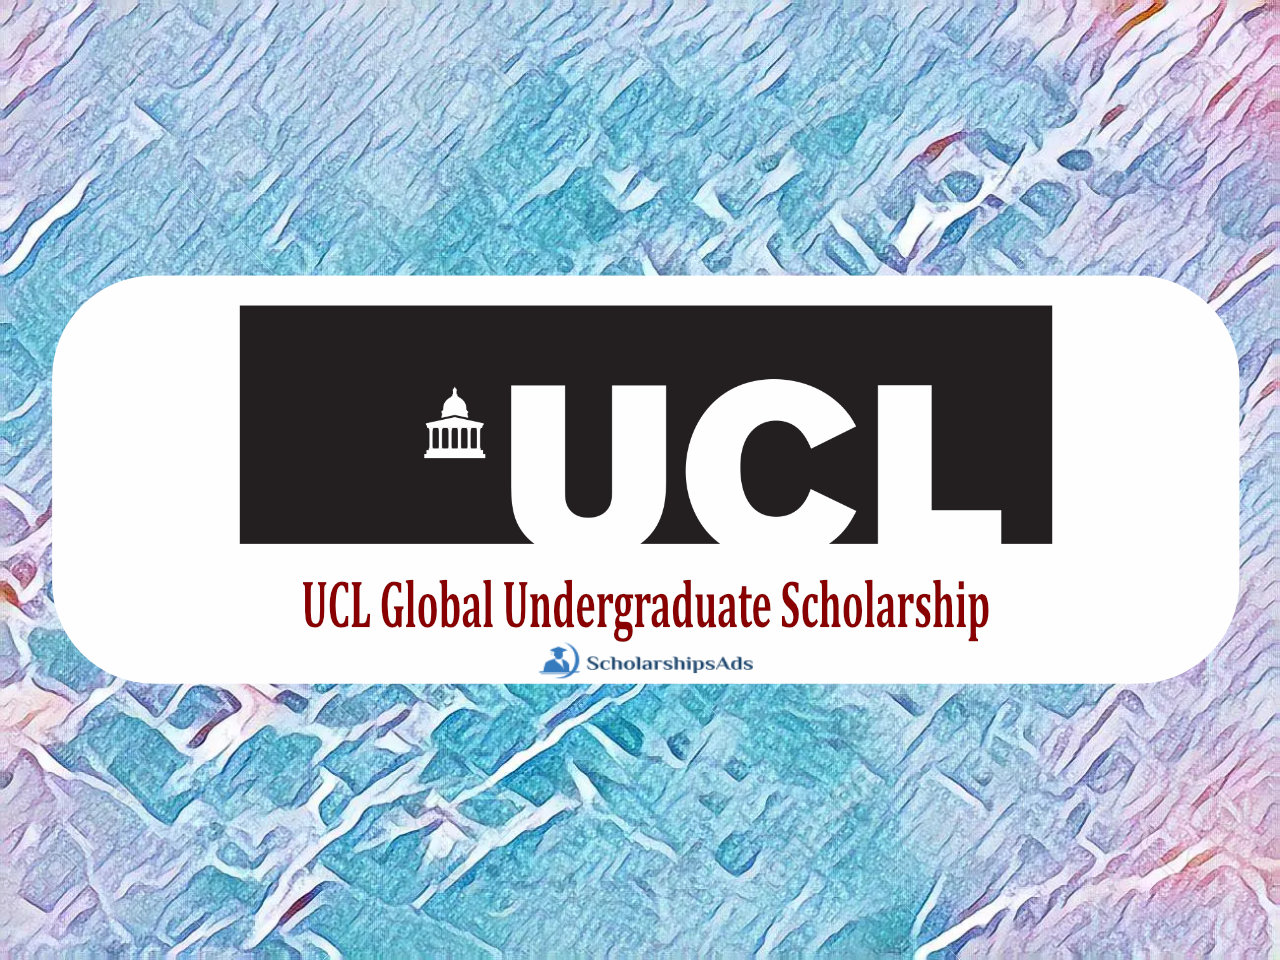  UCL Global Undergraduate Scholarships. 